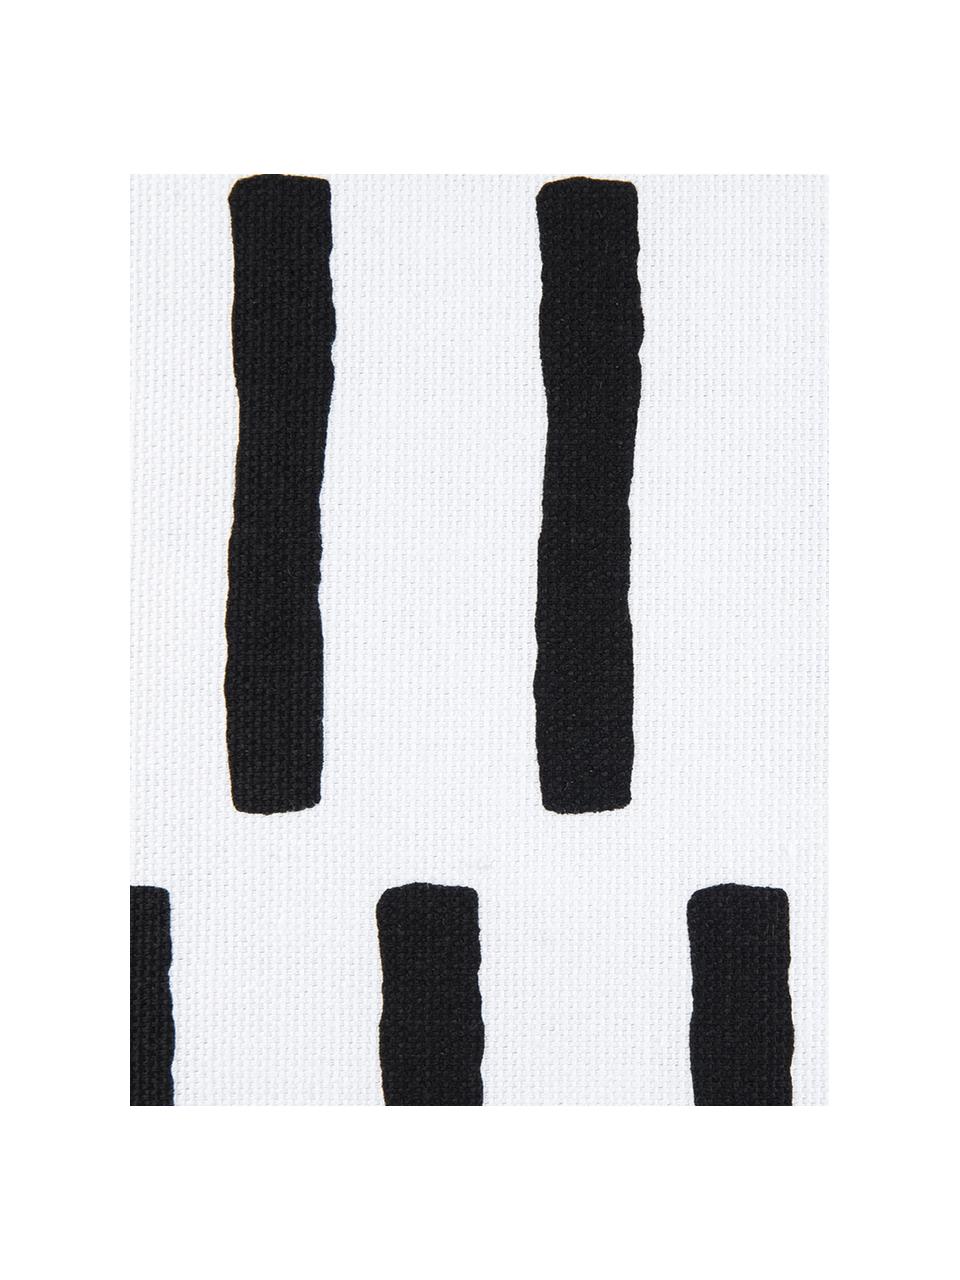 Federa arredo nera/bianca Jerry, 100% cotone, Nero, bianco, fantasia, Larg. 40 x Lung. 40 cm